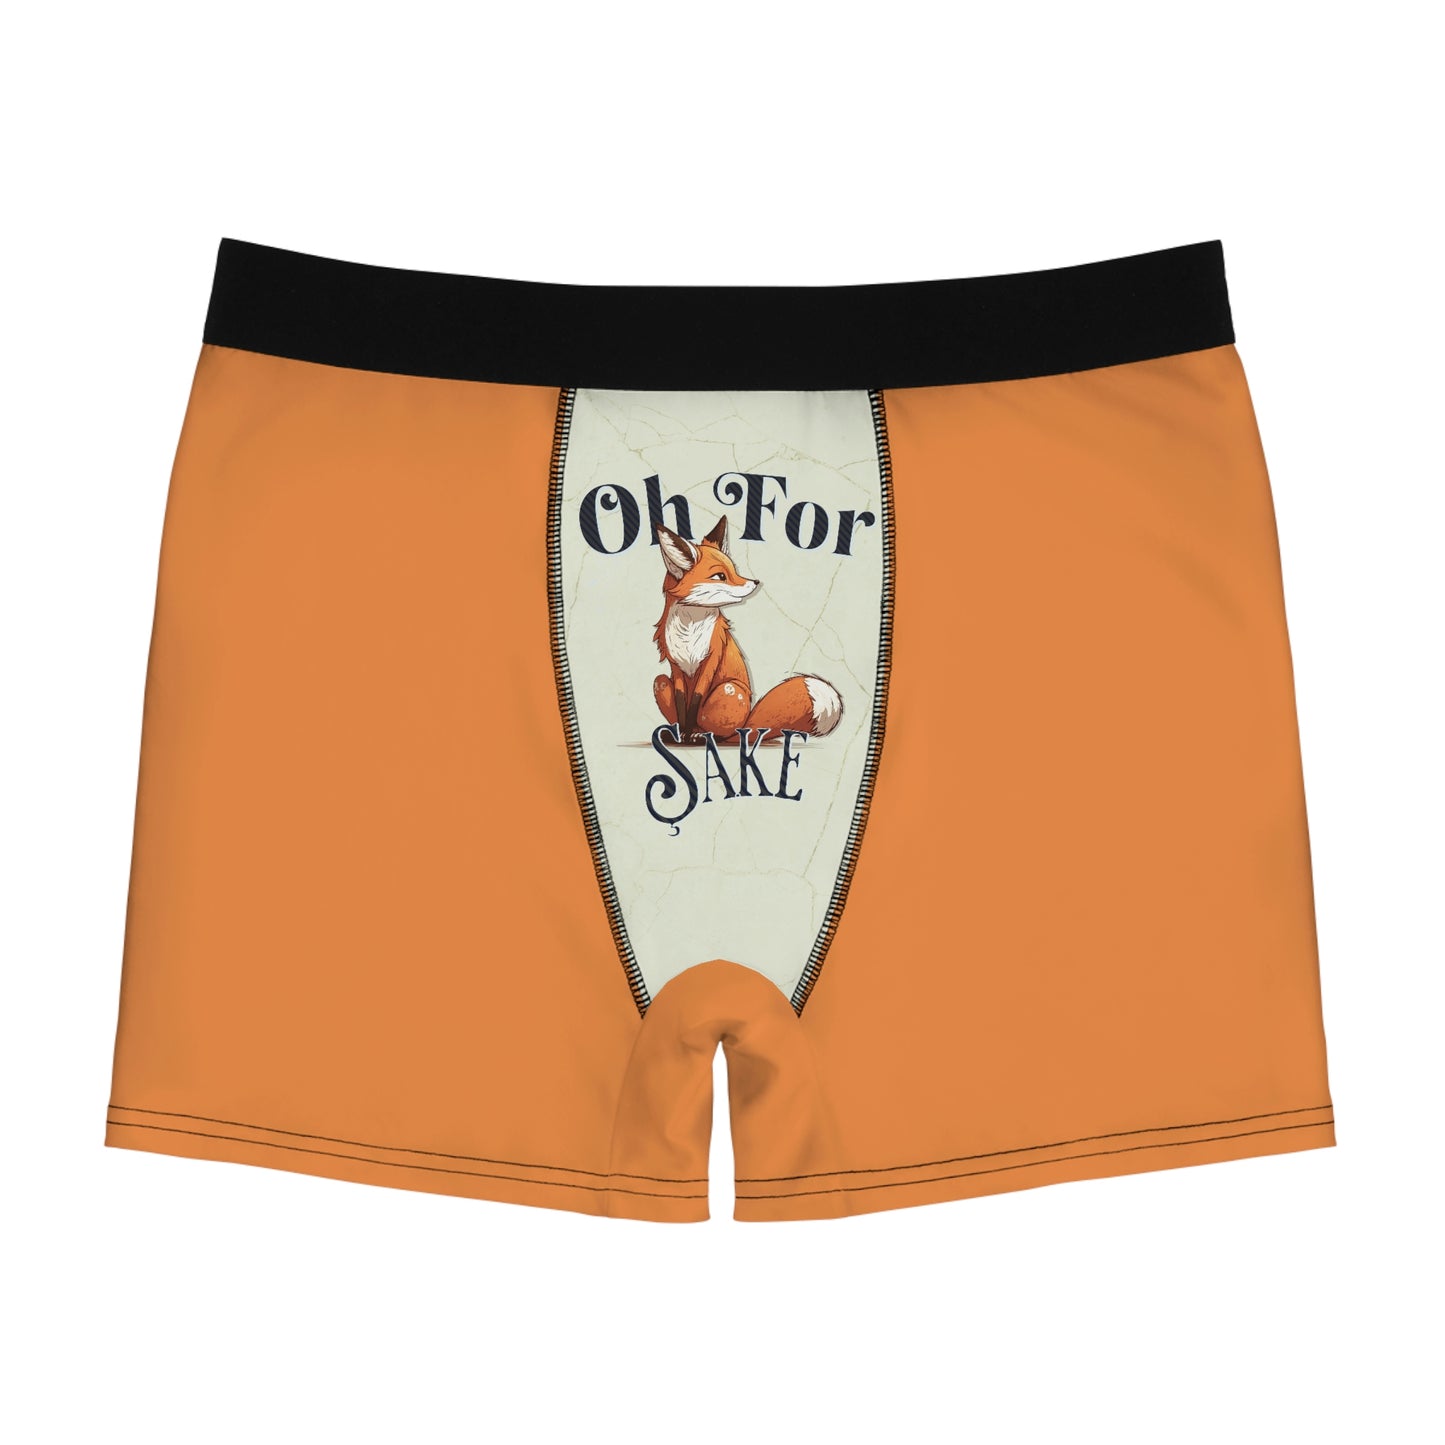 Oh For Fox Sake Boxers for Men, Boyfriend Xmas Gift, Newlywed Gift, Underwear Men, Men's Boxer Briefs - Orange